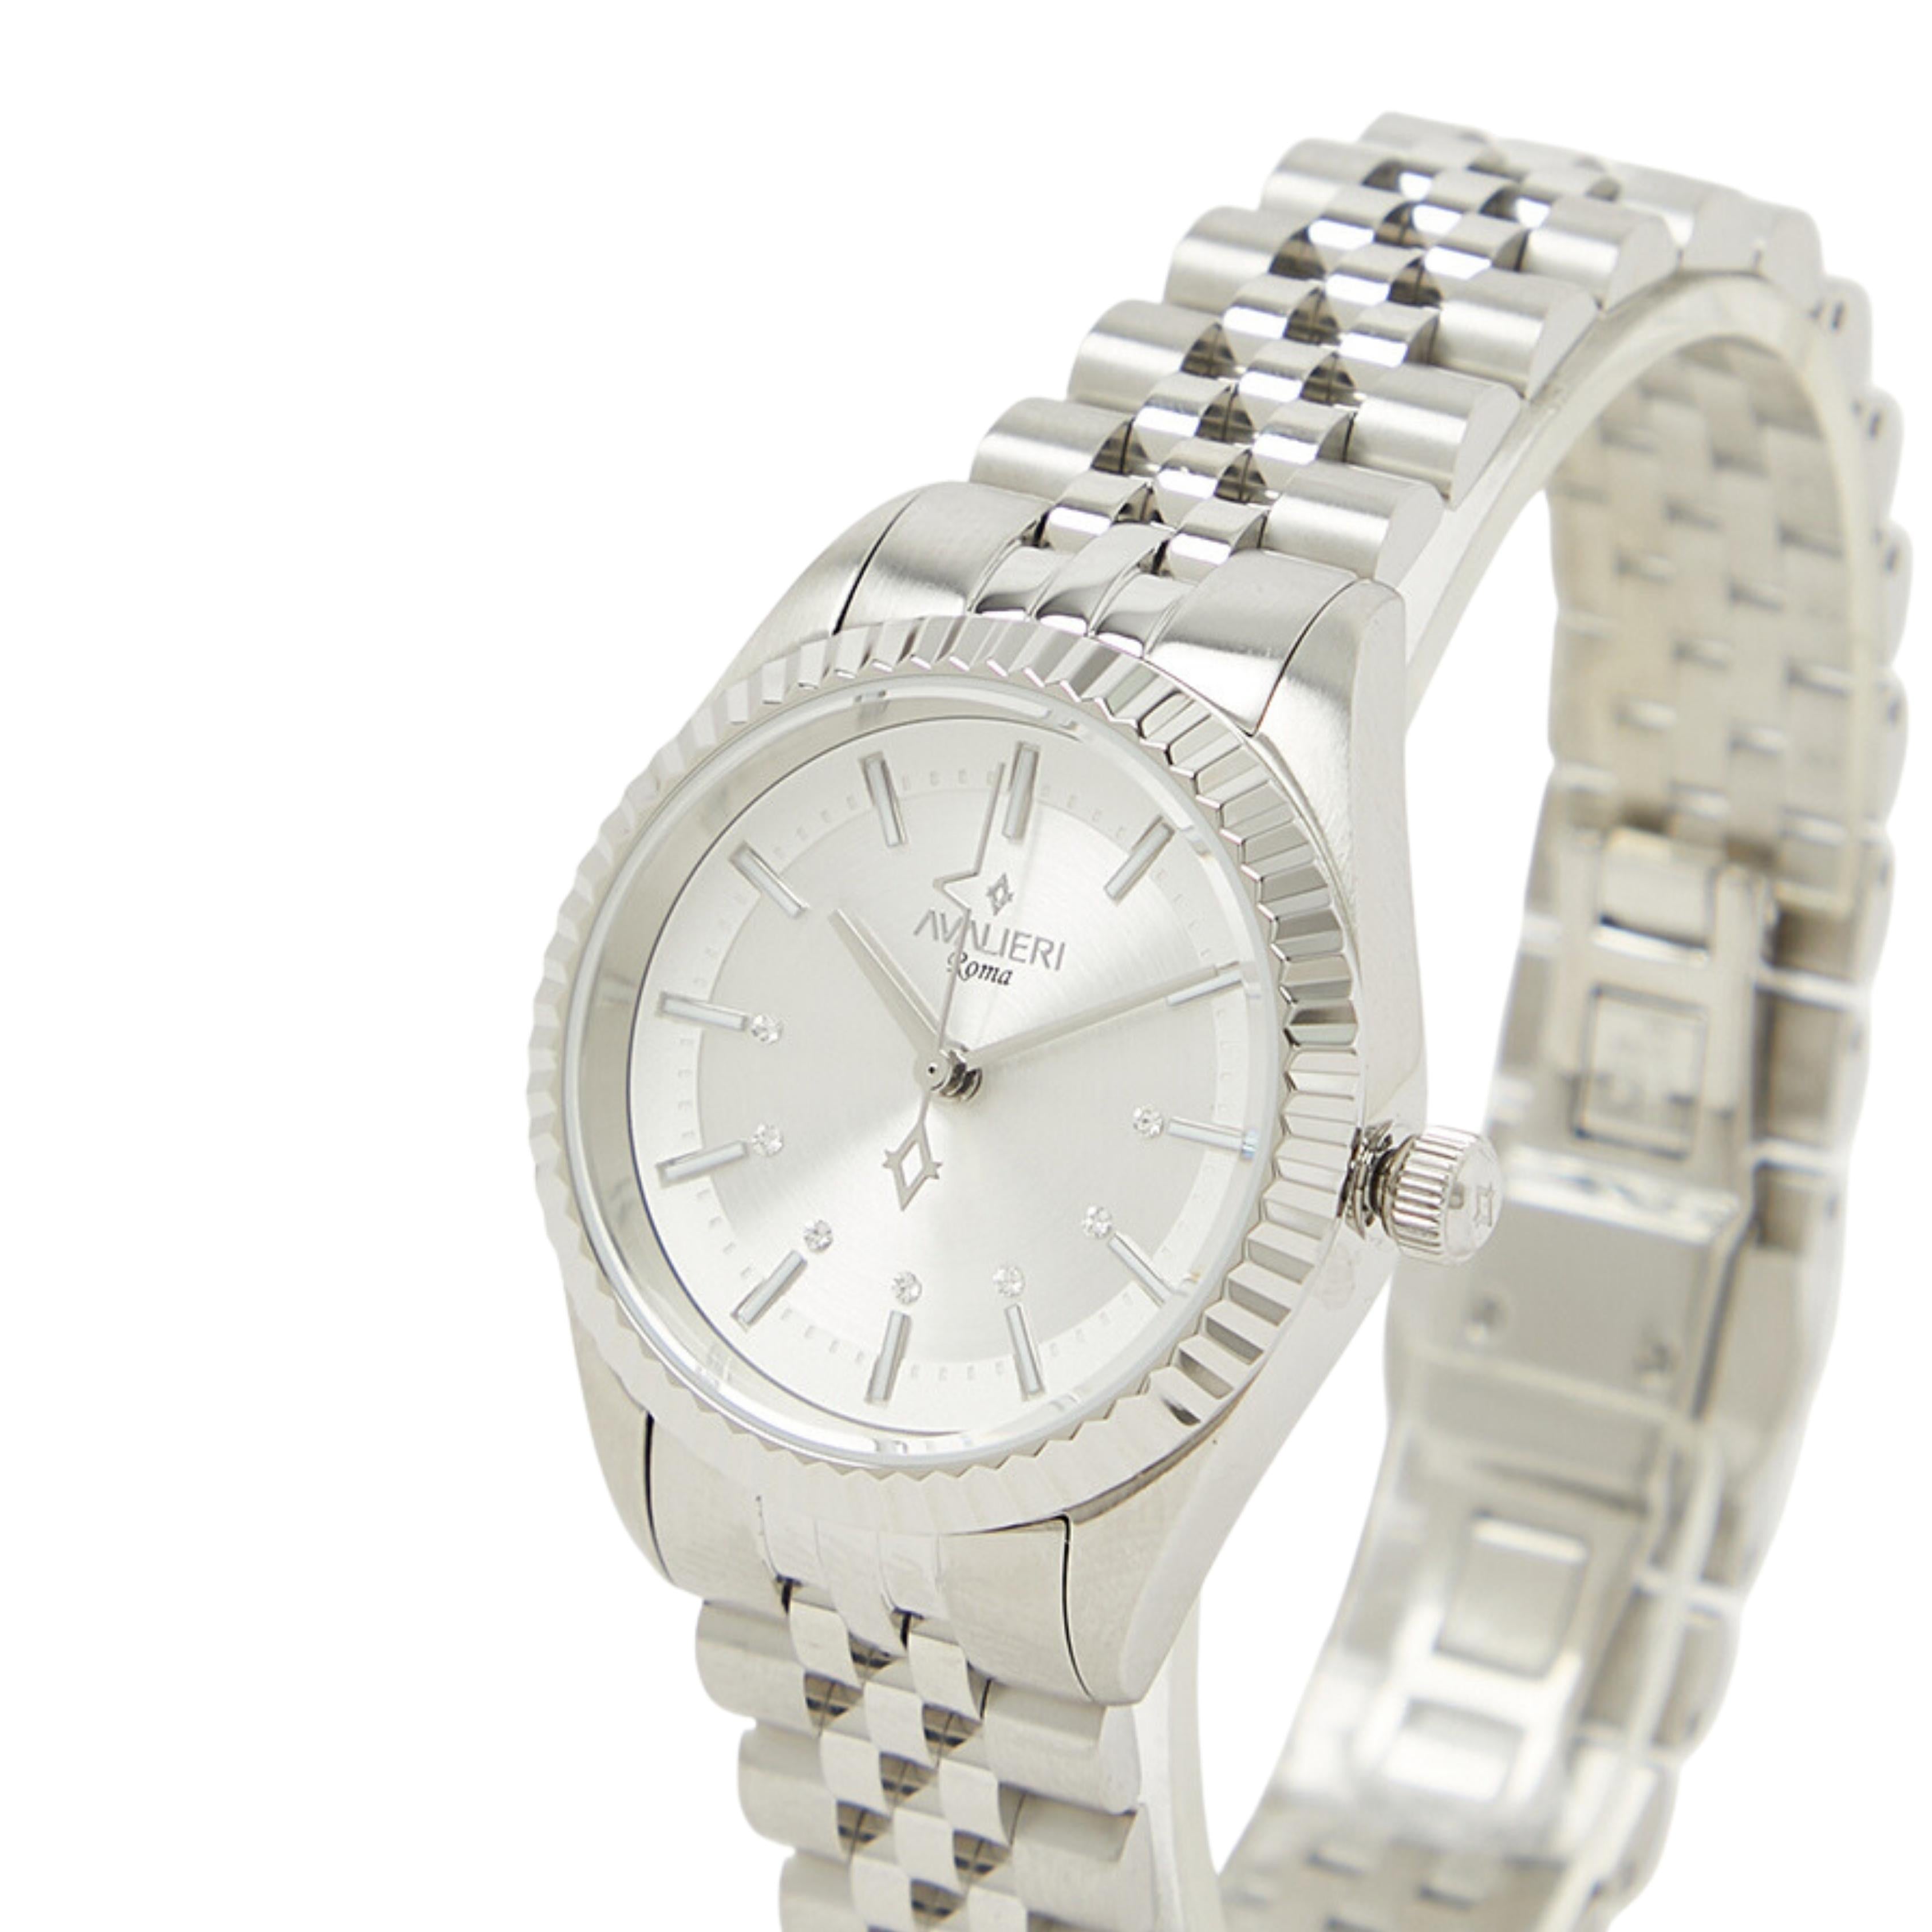 Avalieri Women's Quartz Watch With Silver White Dial - AV-2603B